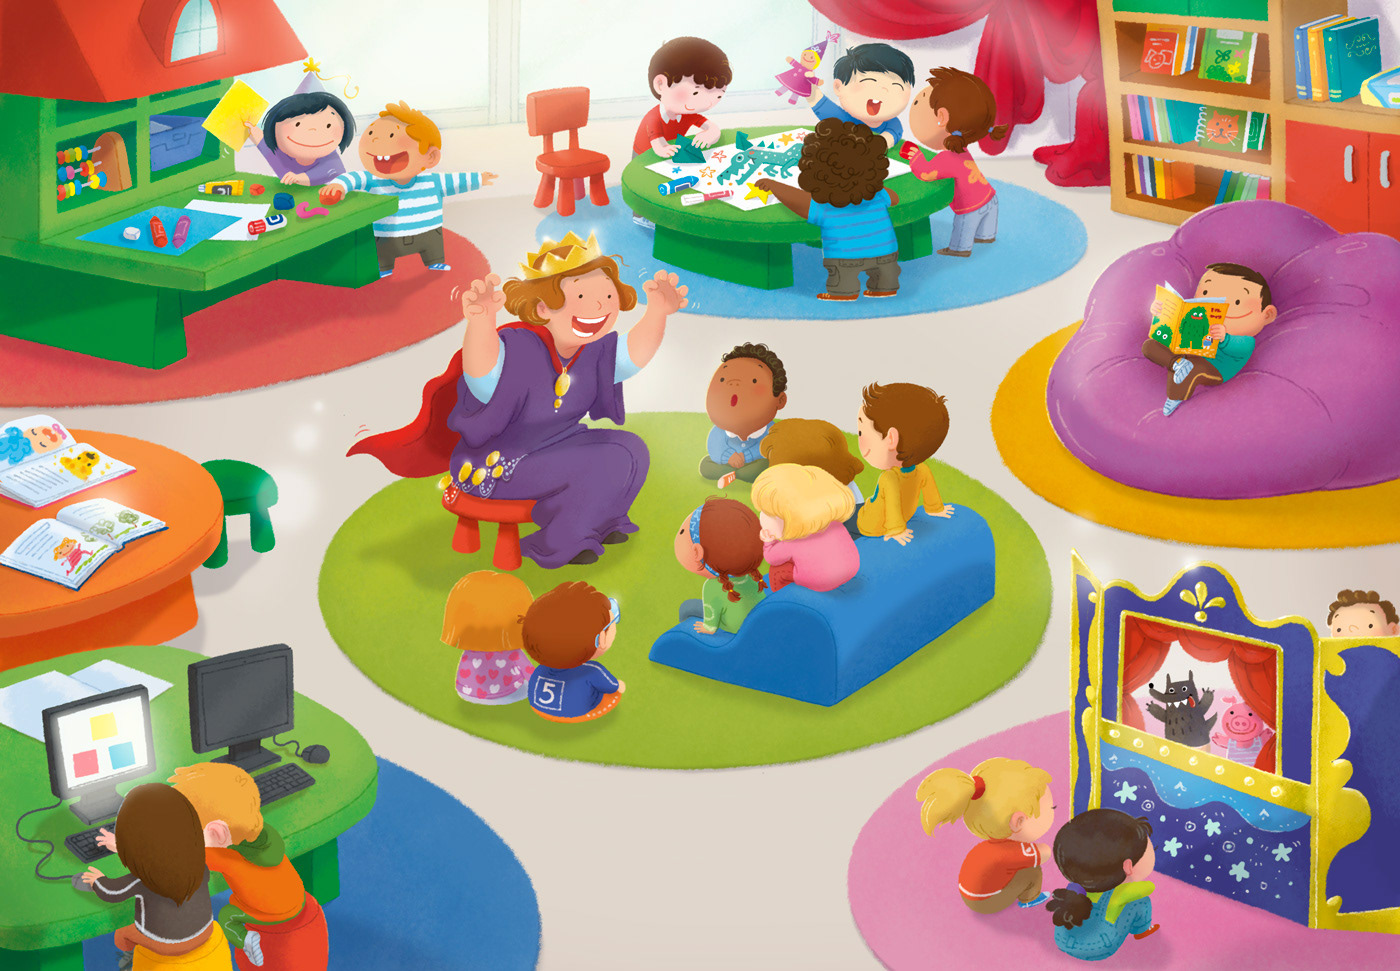 ILLUSTRATION  ChildrenIllustration kids classroom school schoolsupplies colorfull littlekids play children